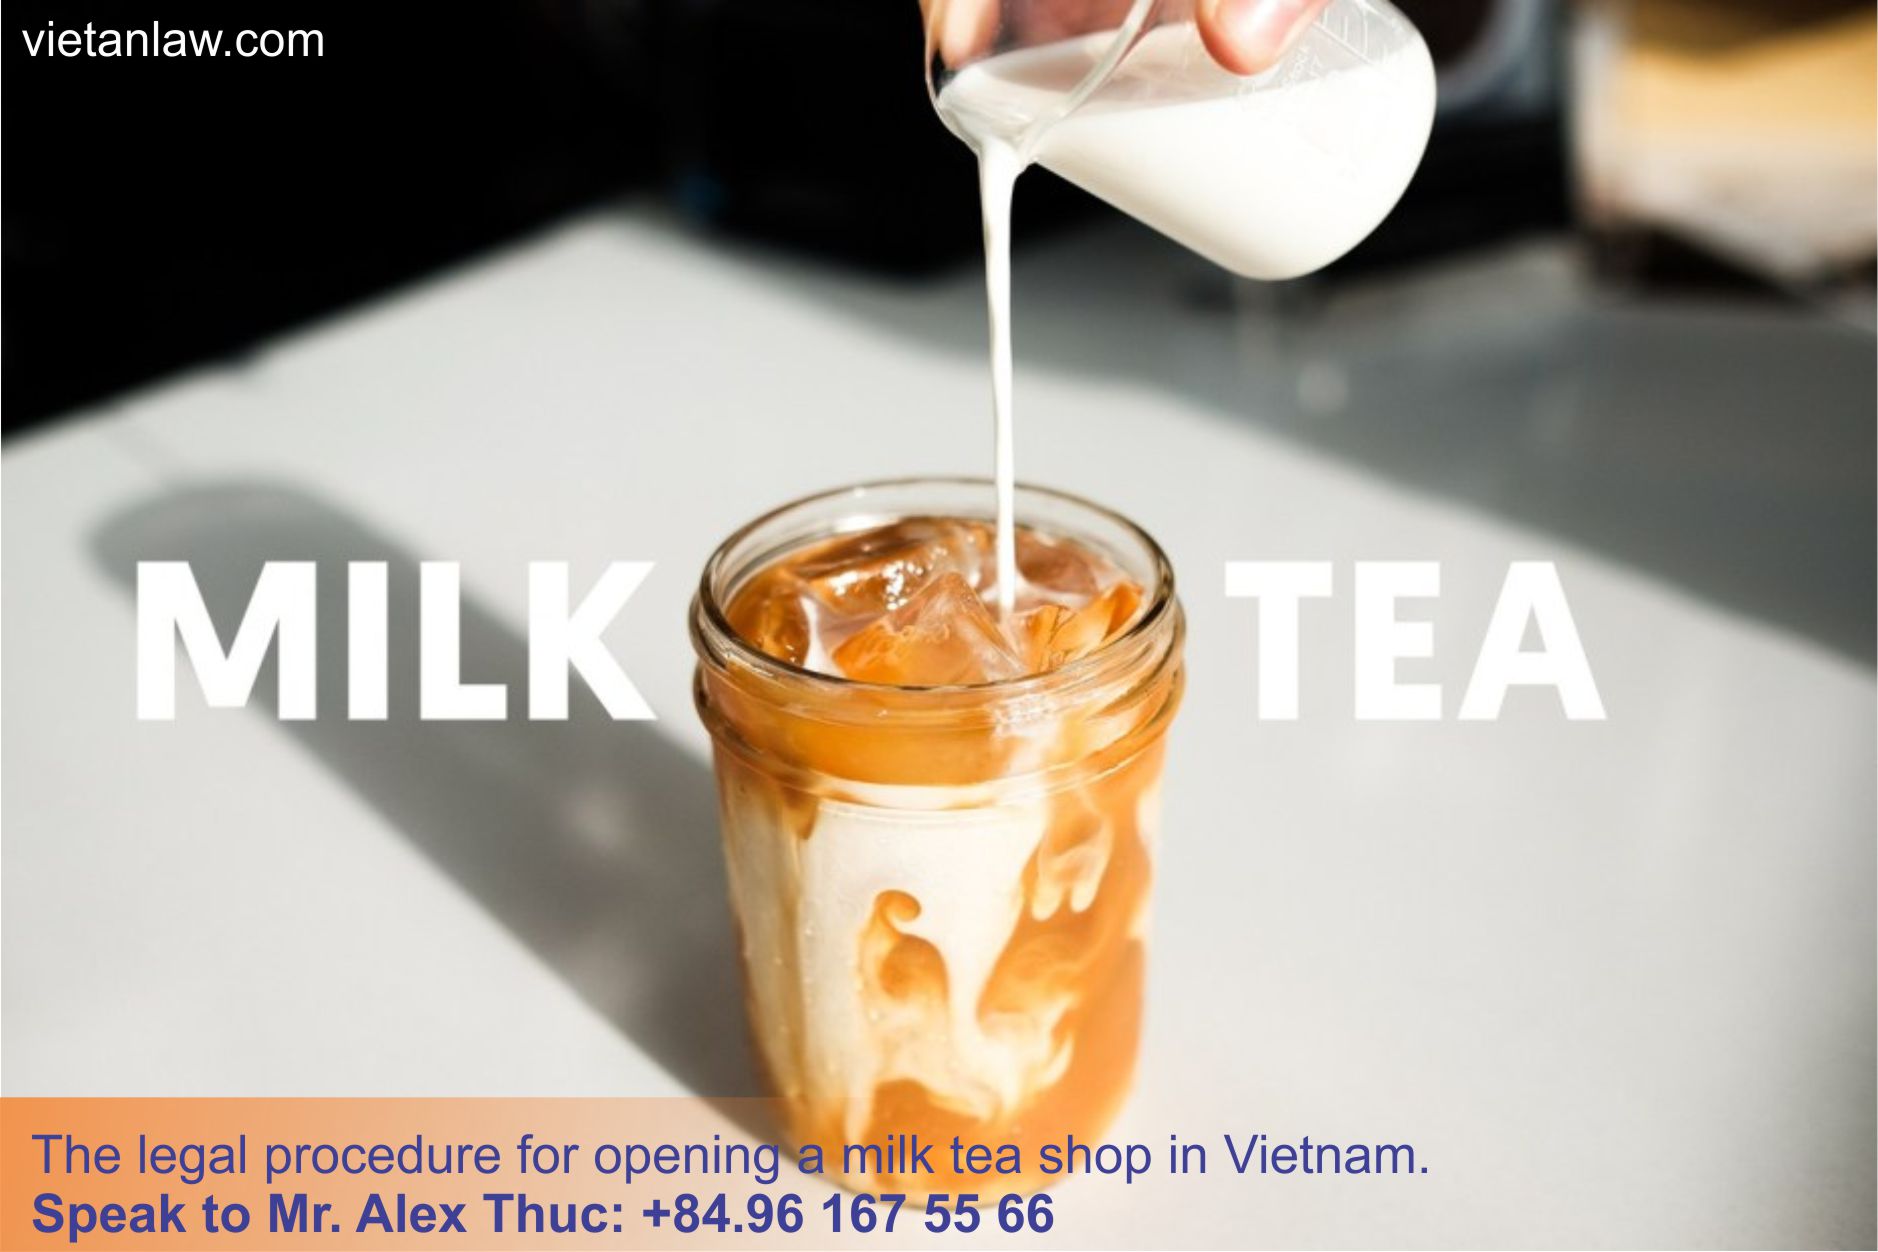 The legal procedure for opening a milk tea shop in Vietnam.